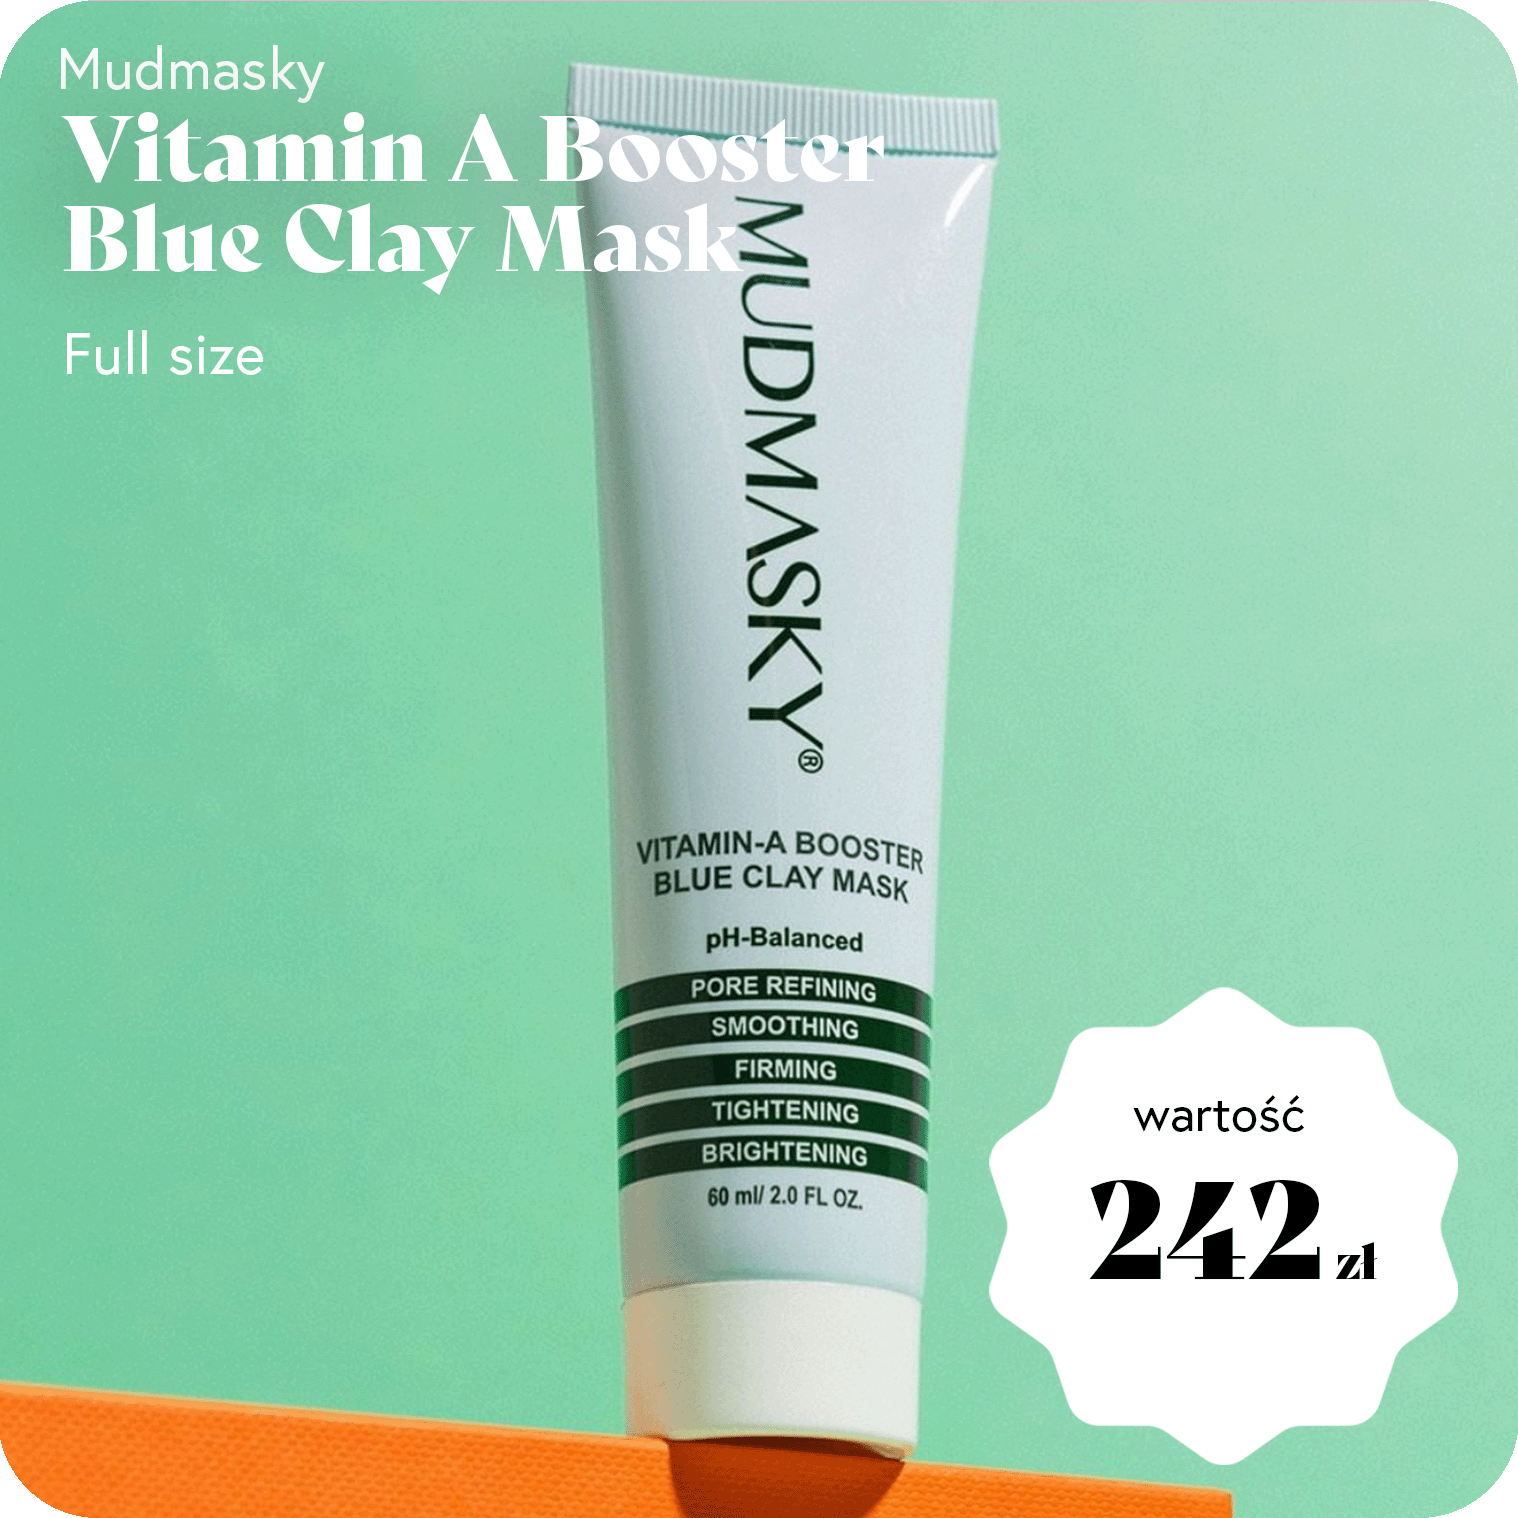 Mudmasky- Vitamin A Booster Blue Clay Mask